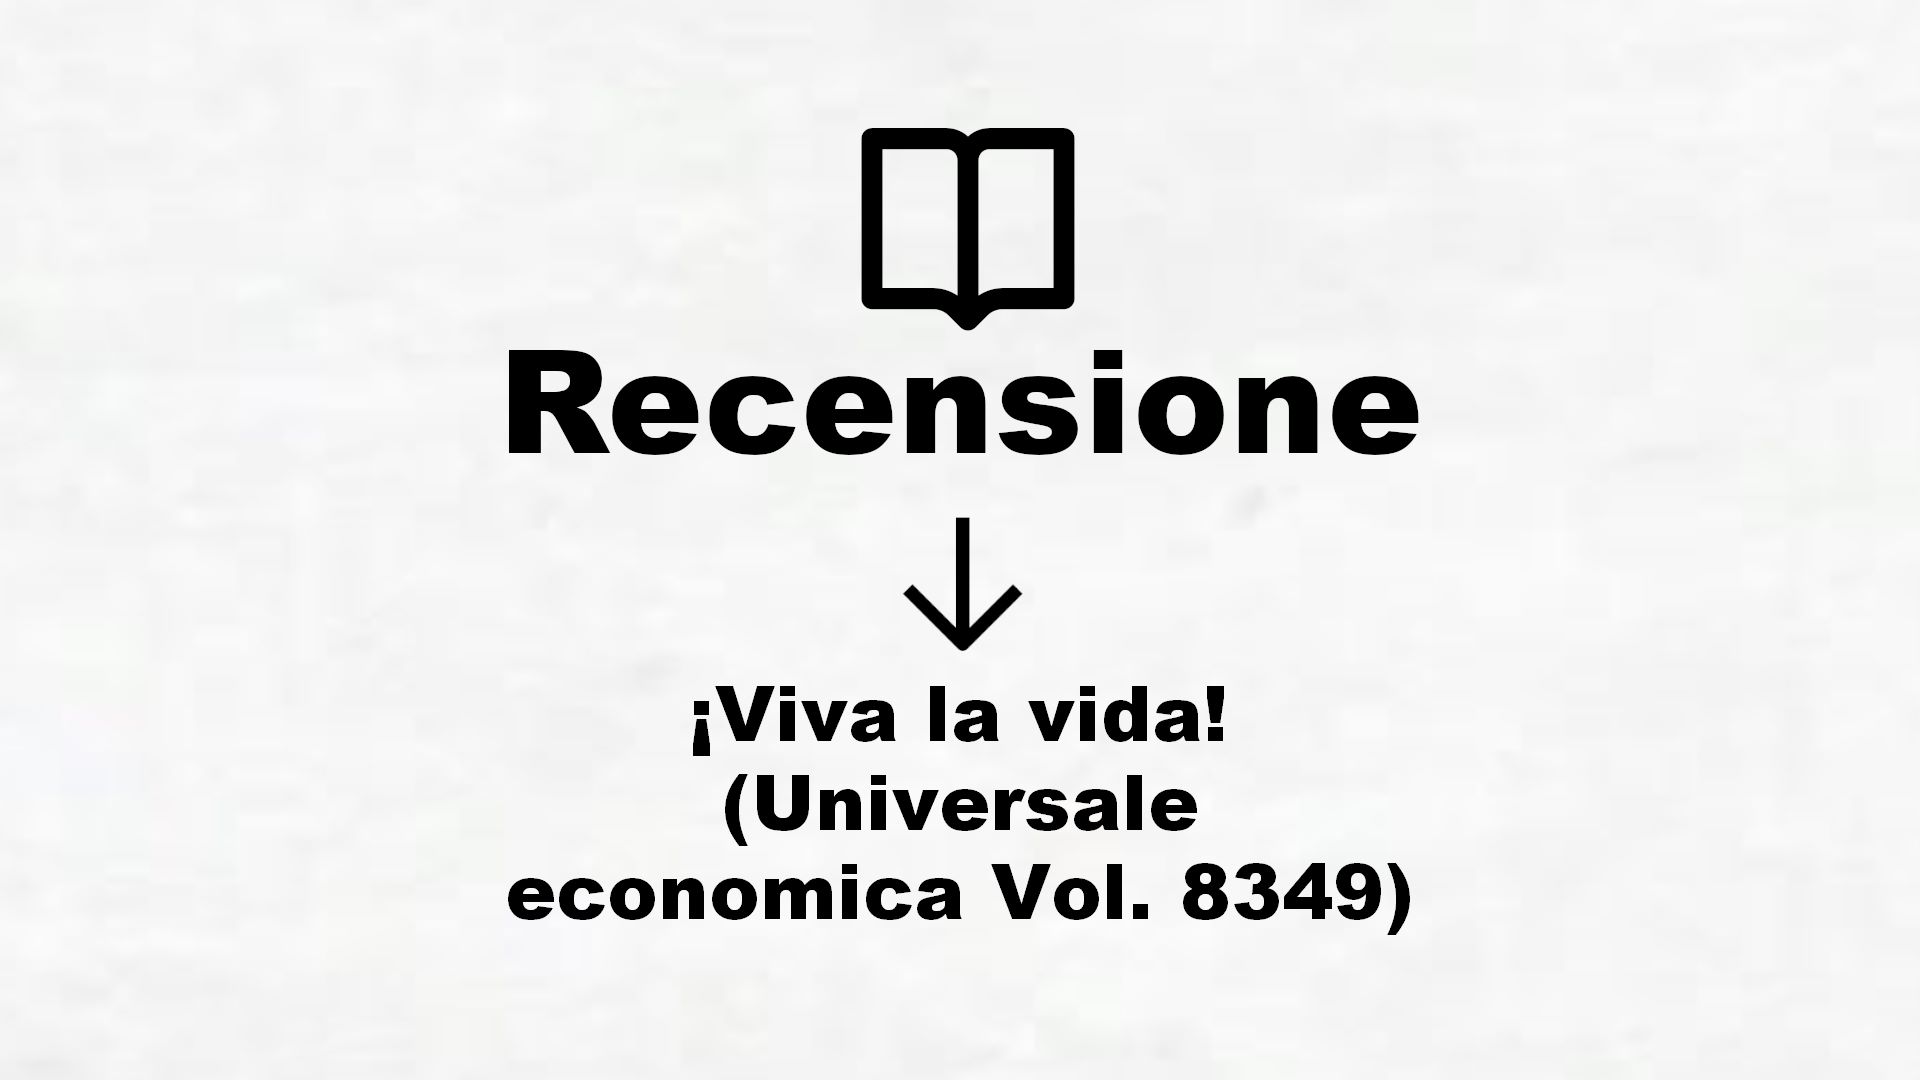 ¡Viva la vida! (Universale economica Vol. 8349) – Recensione Libro